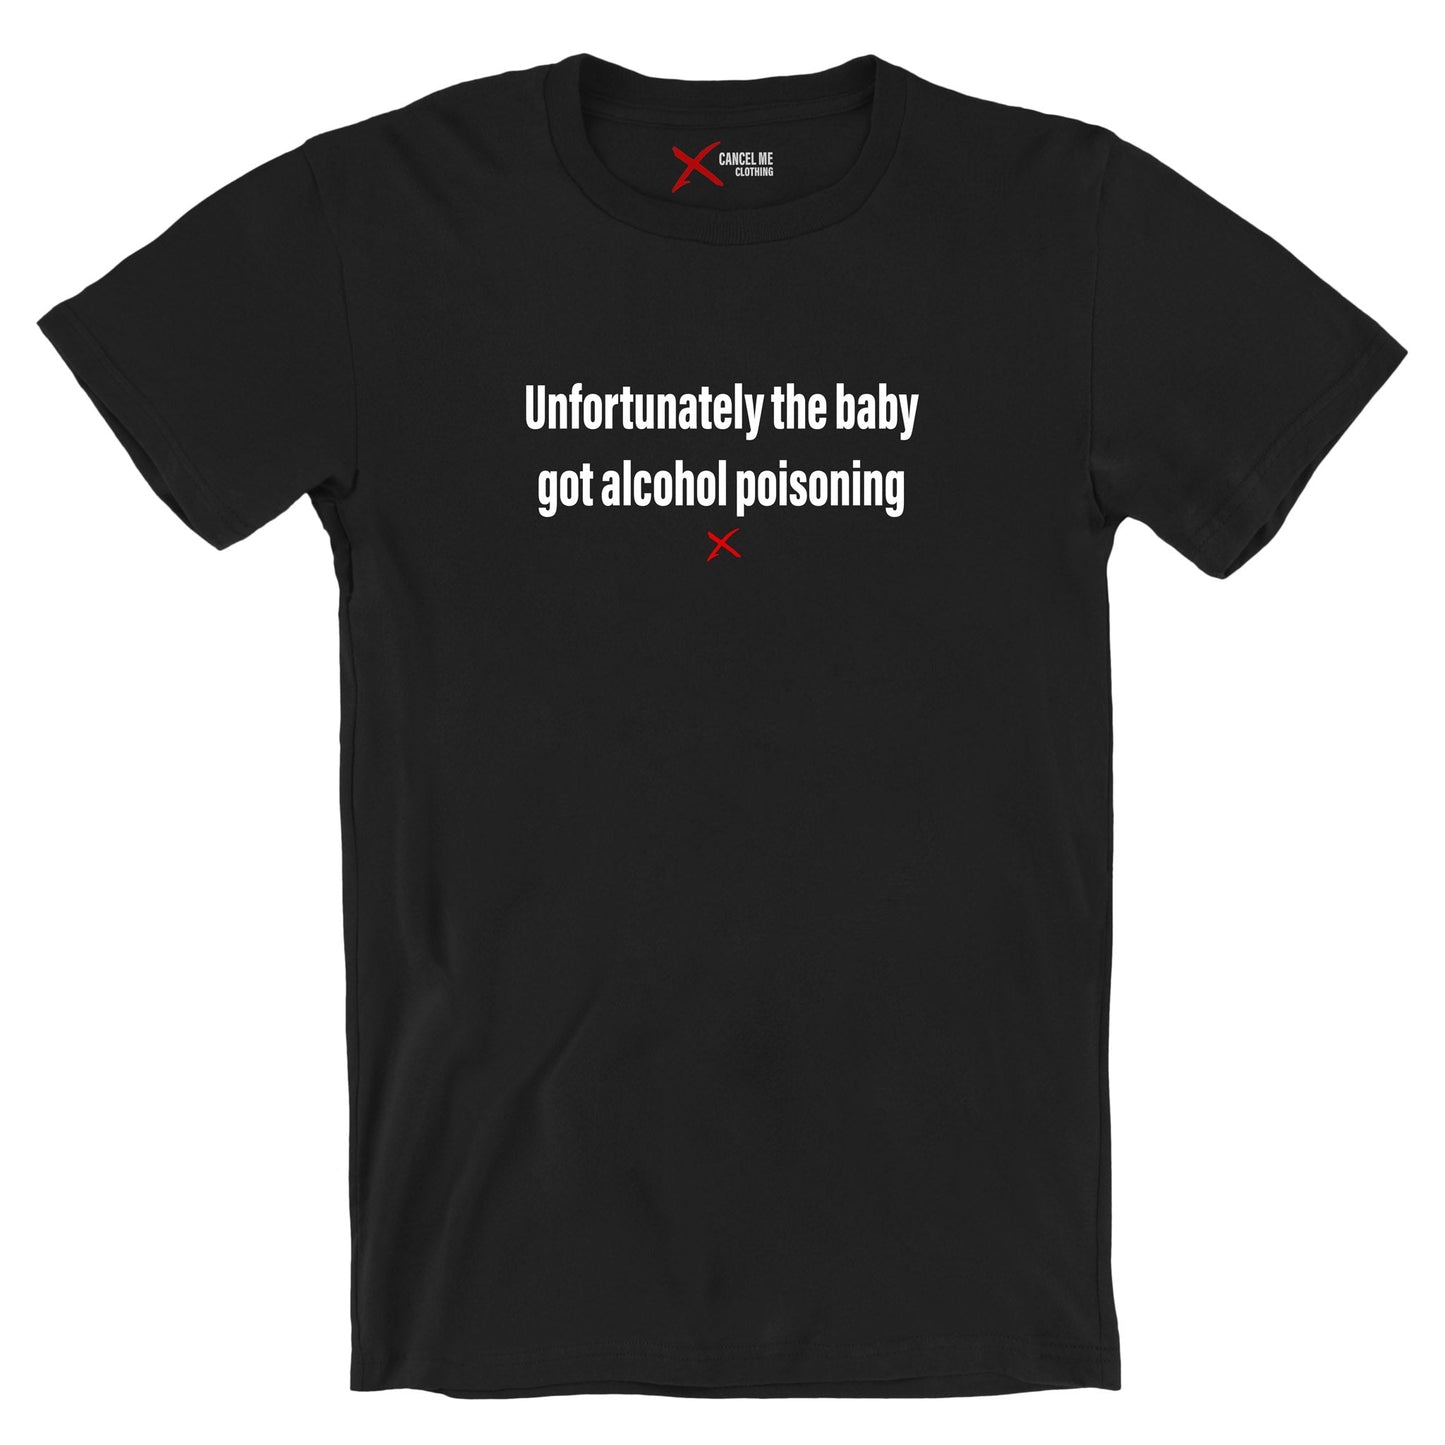 Unfortunately the baby got alcohol poisoning - Shirt